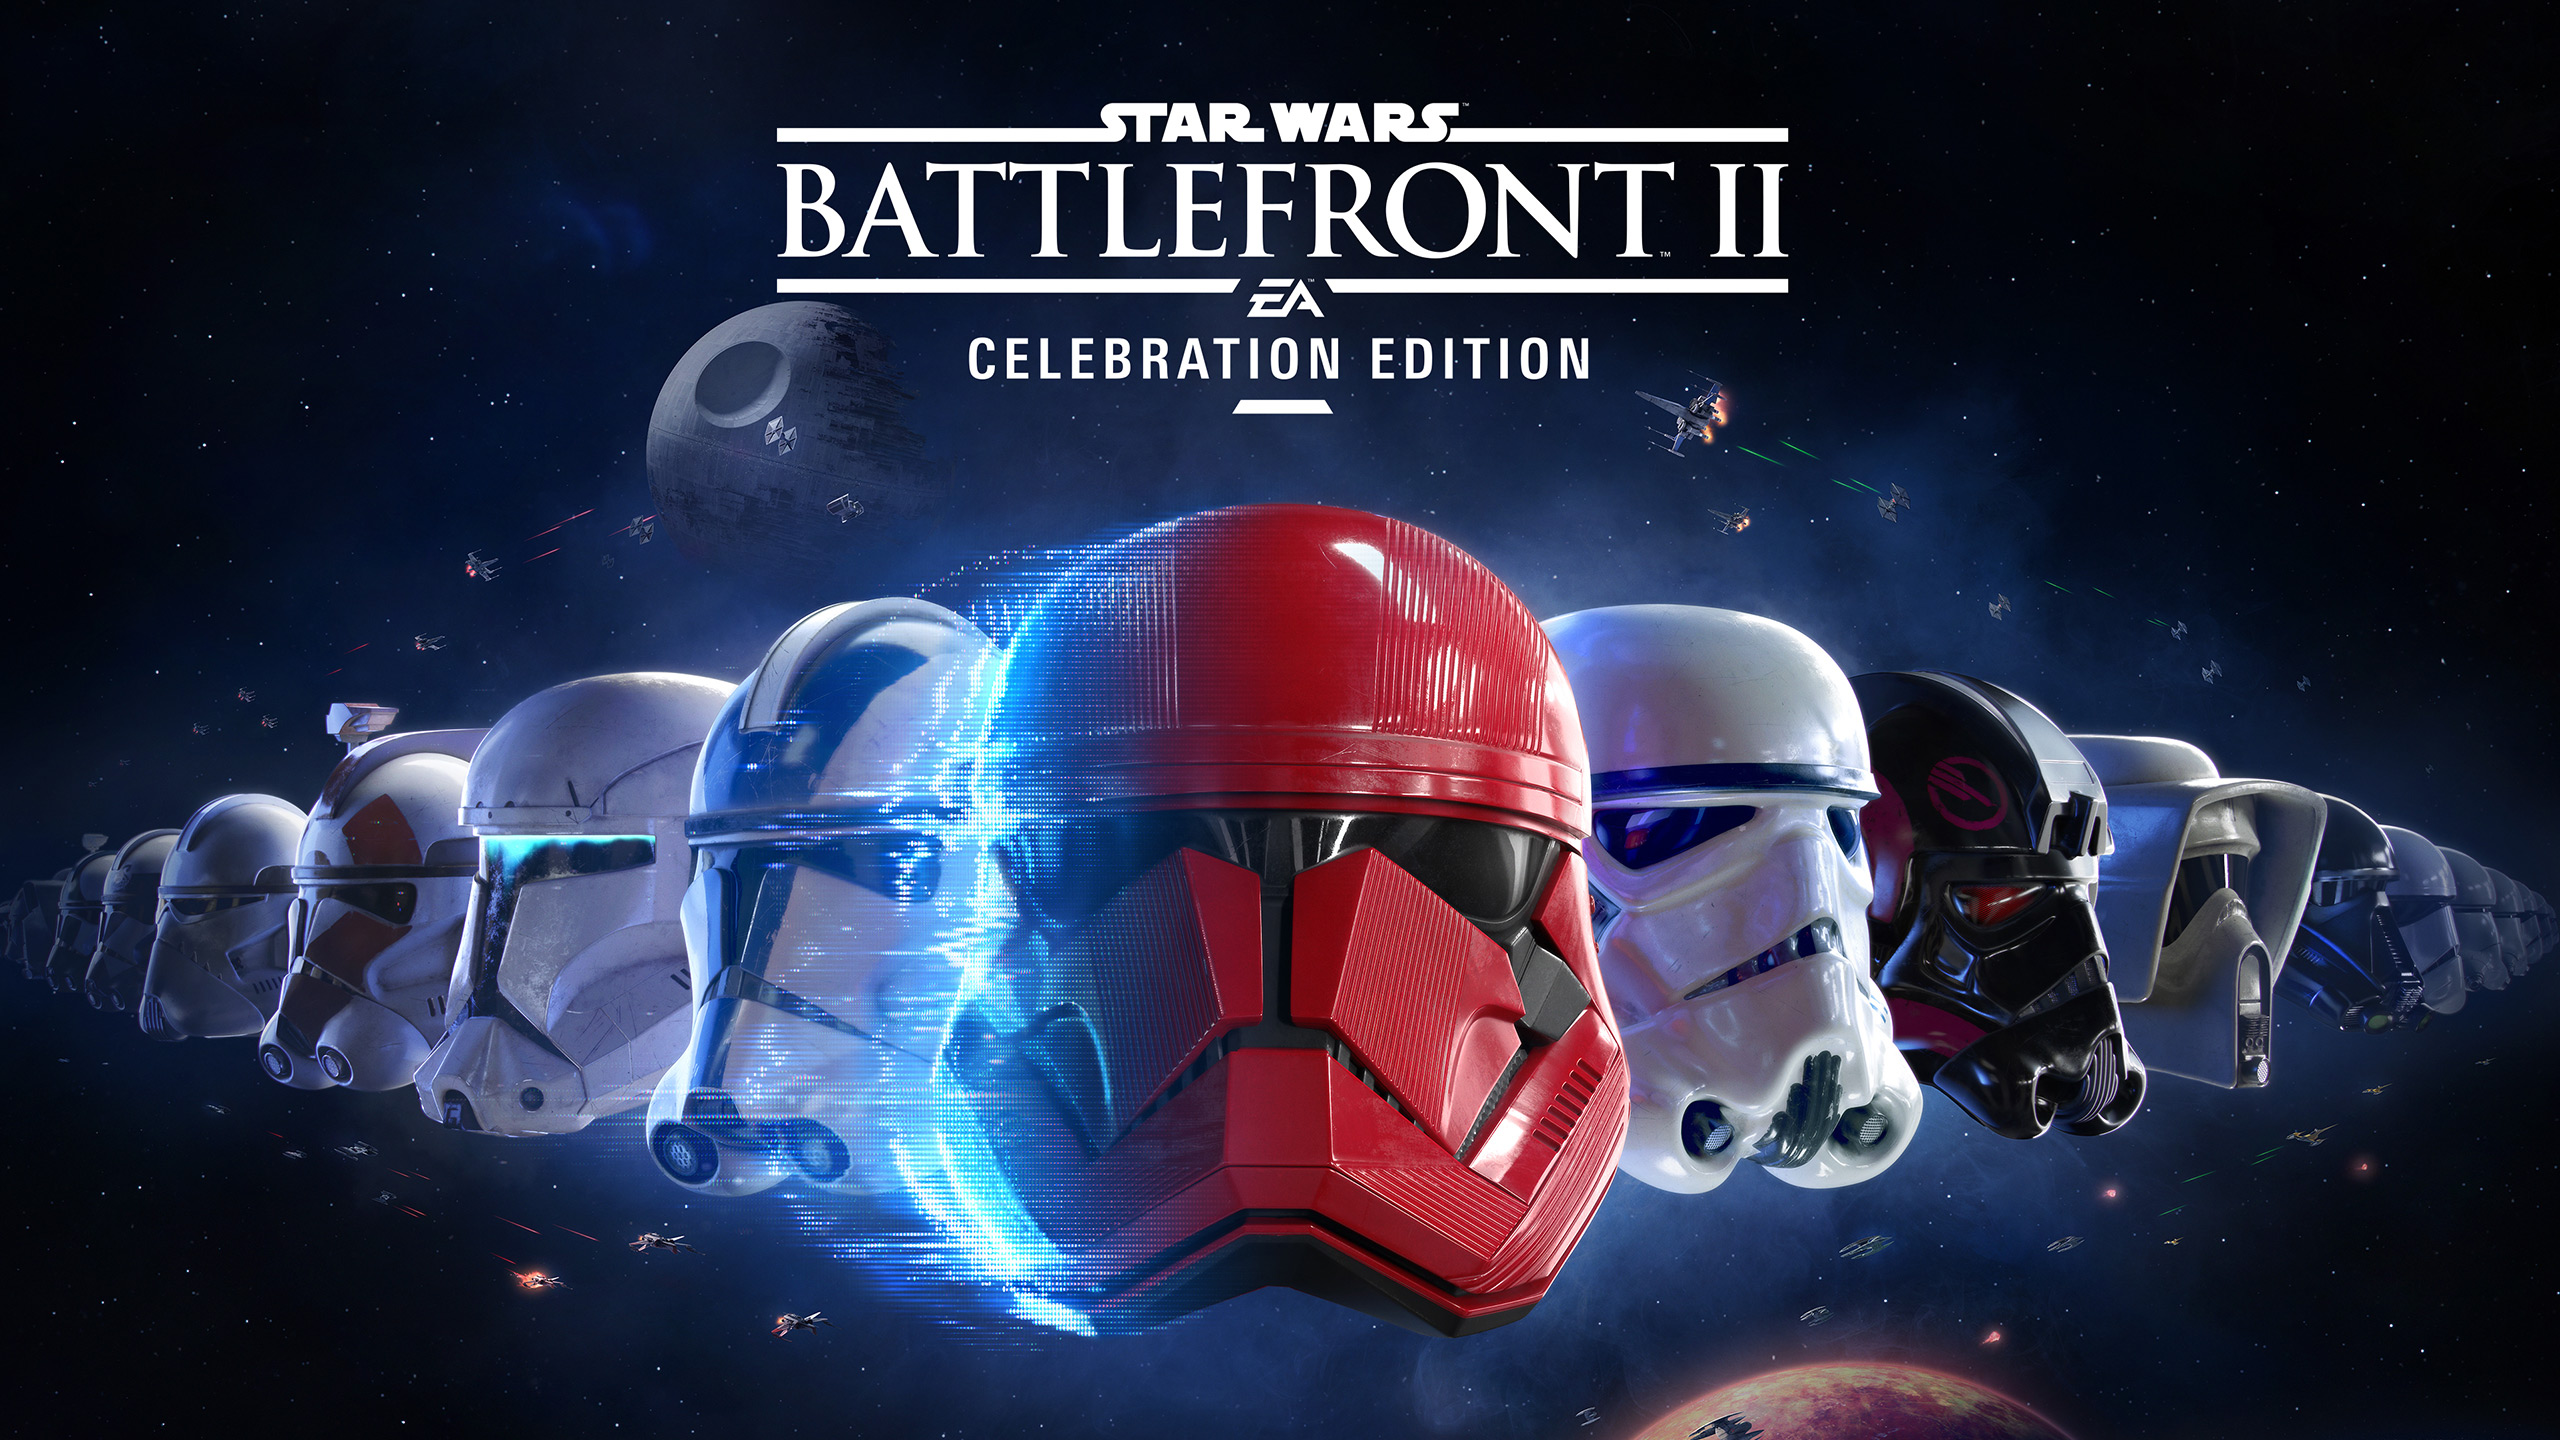 Star Wars Battlefront Ii Celebration Edition